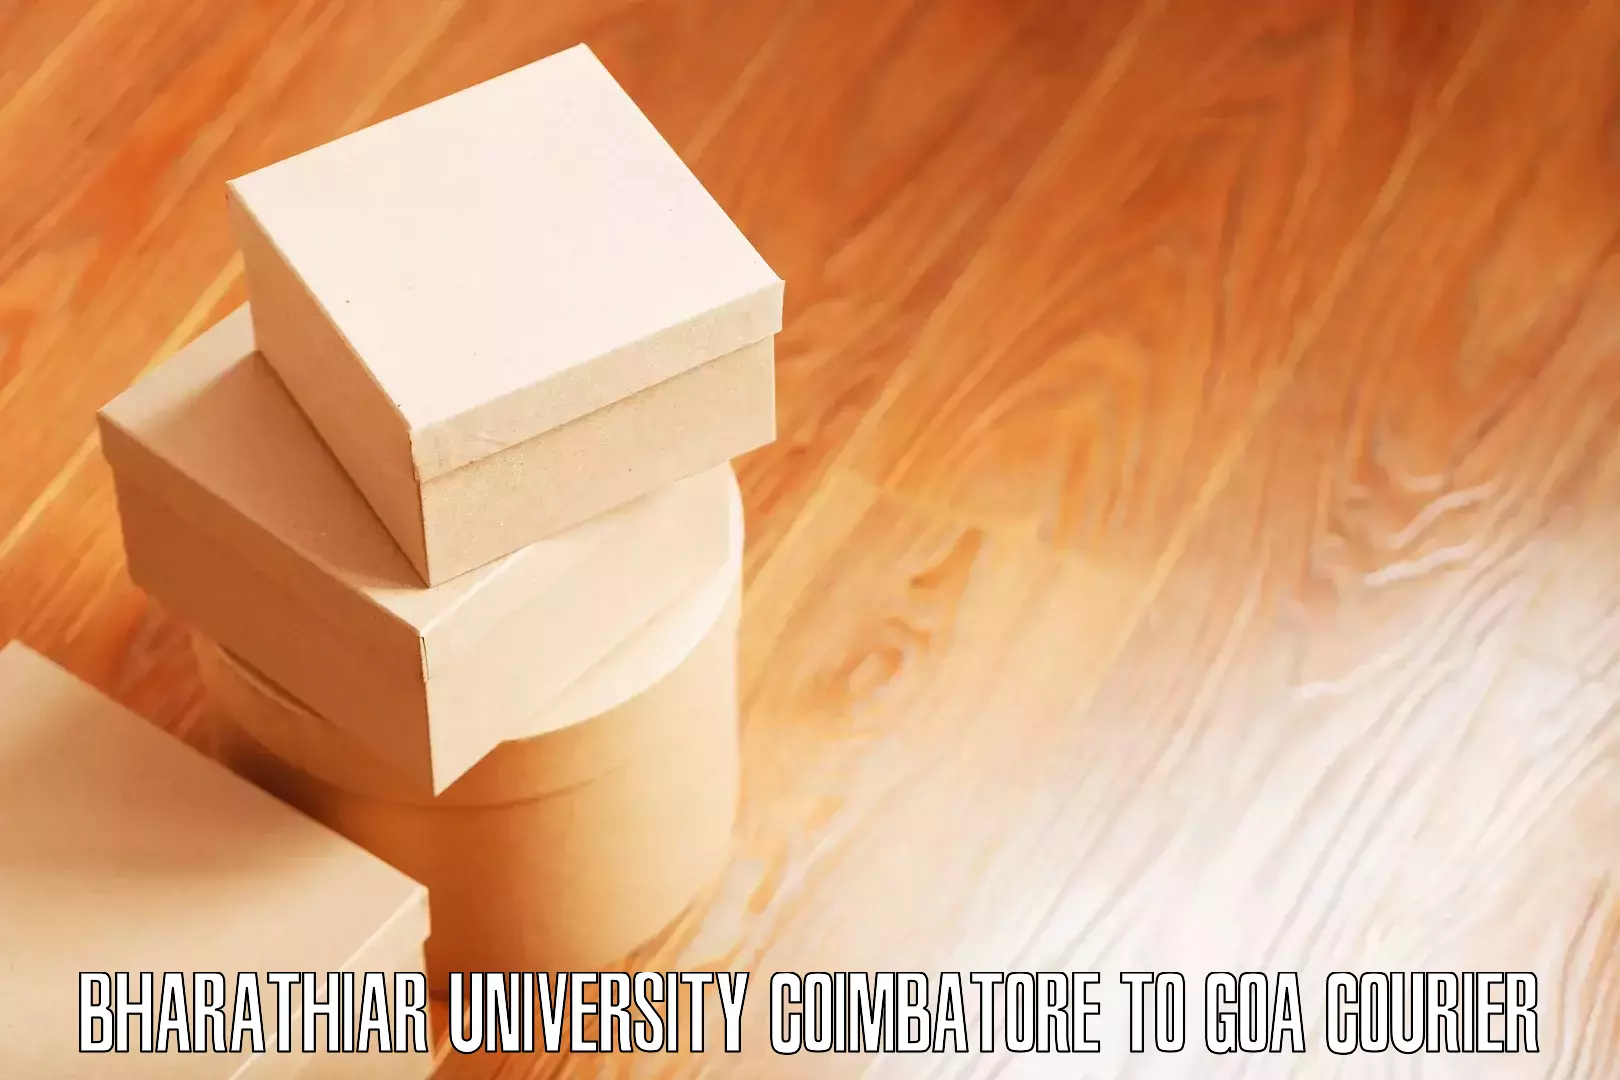 Furniture relocation experts Bharathiar University Coimbatore to IIT Goa